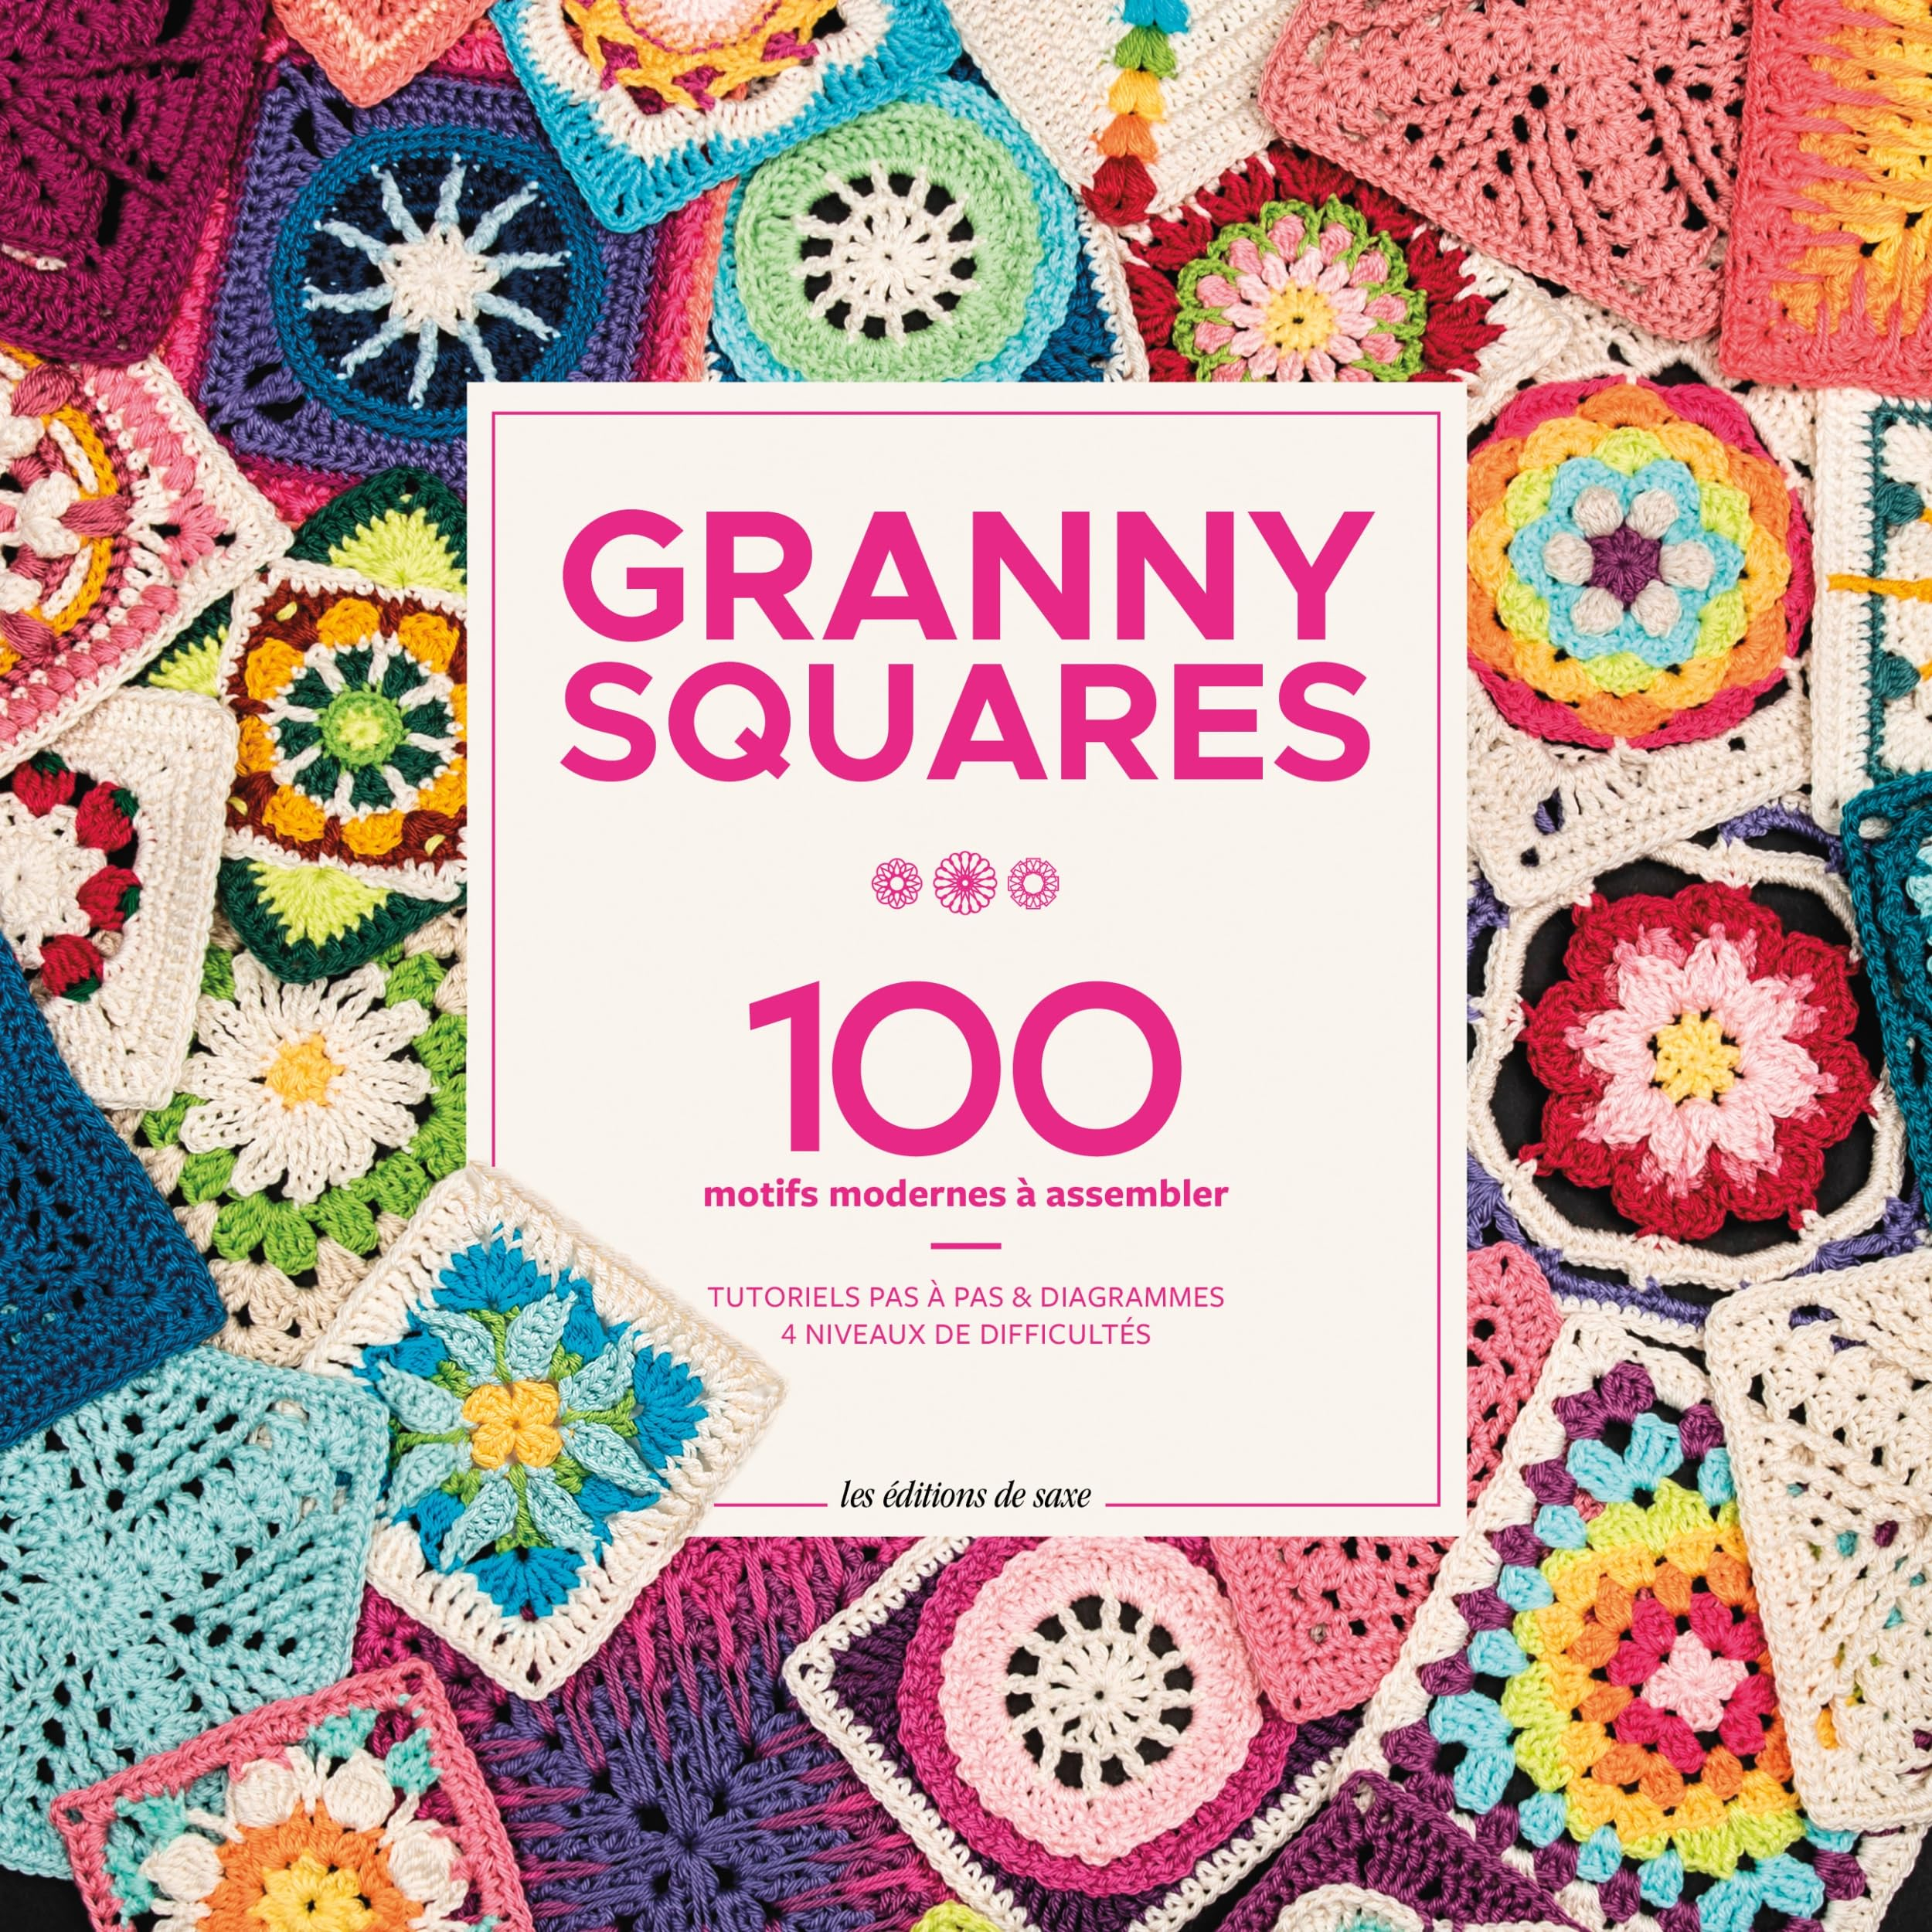 Granny squares : 100 motifs modernes à assembler